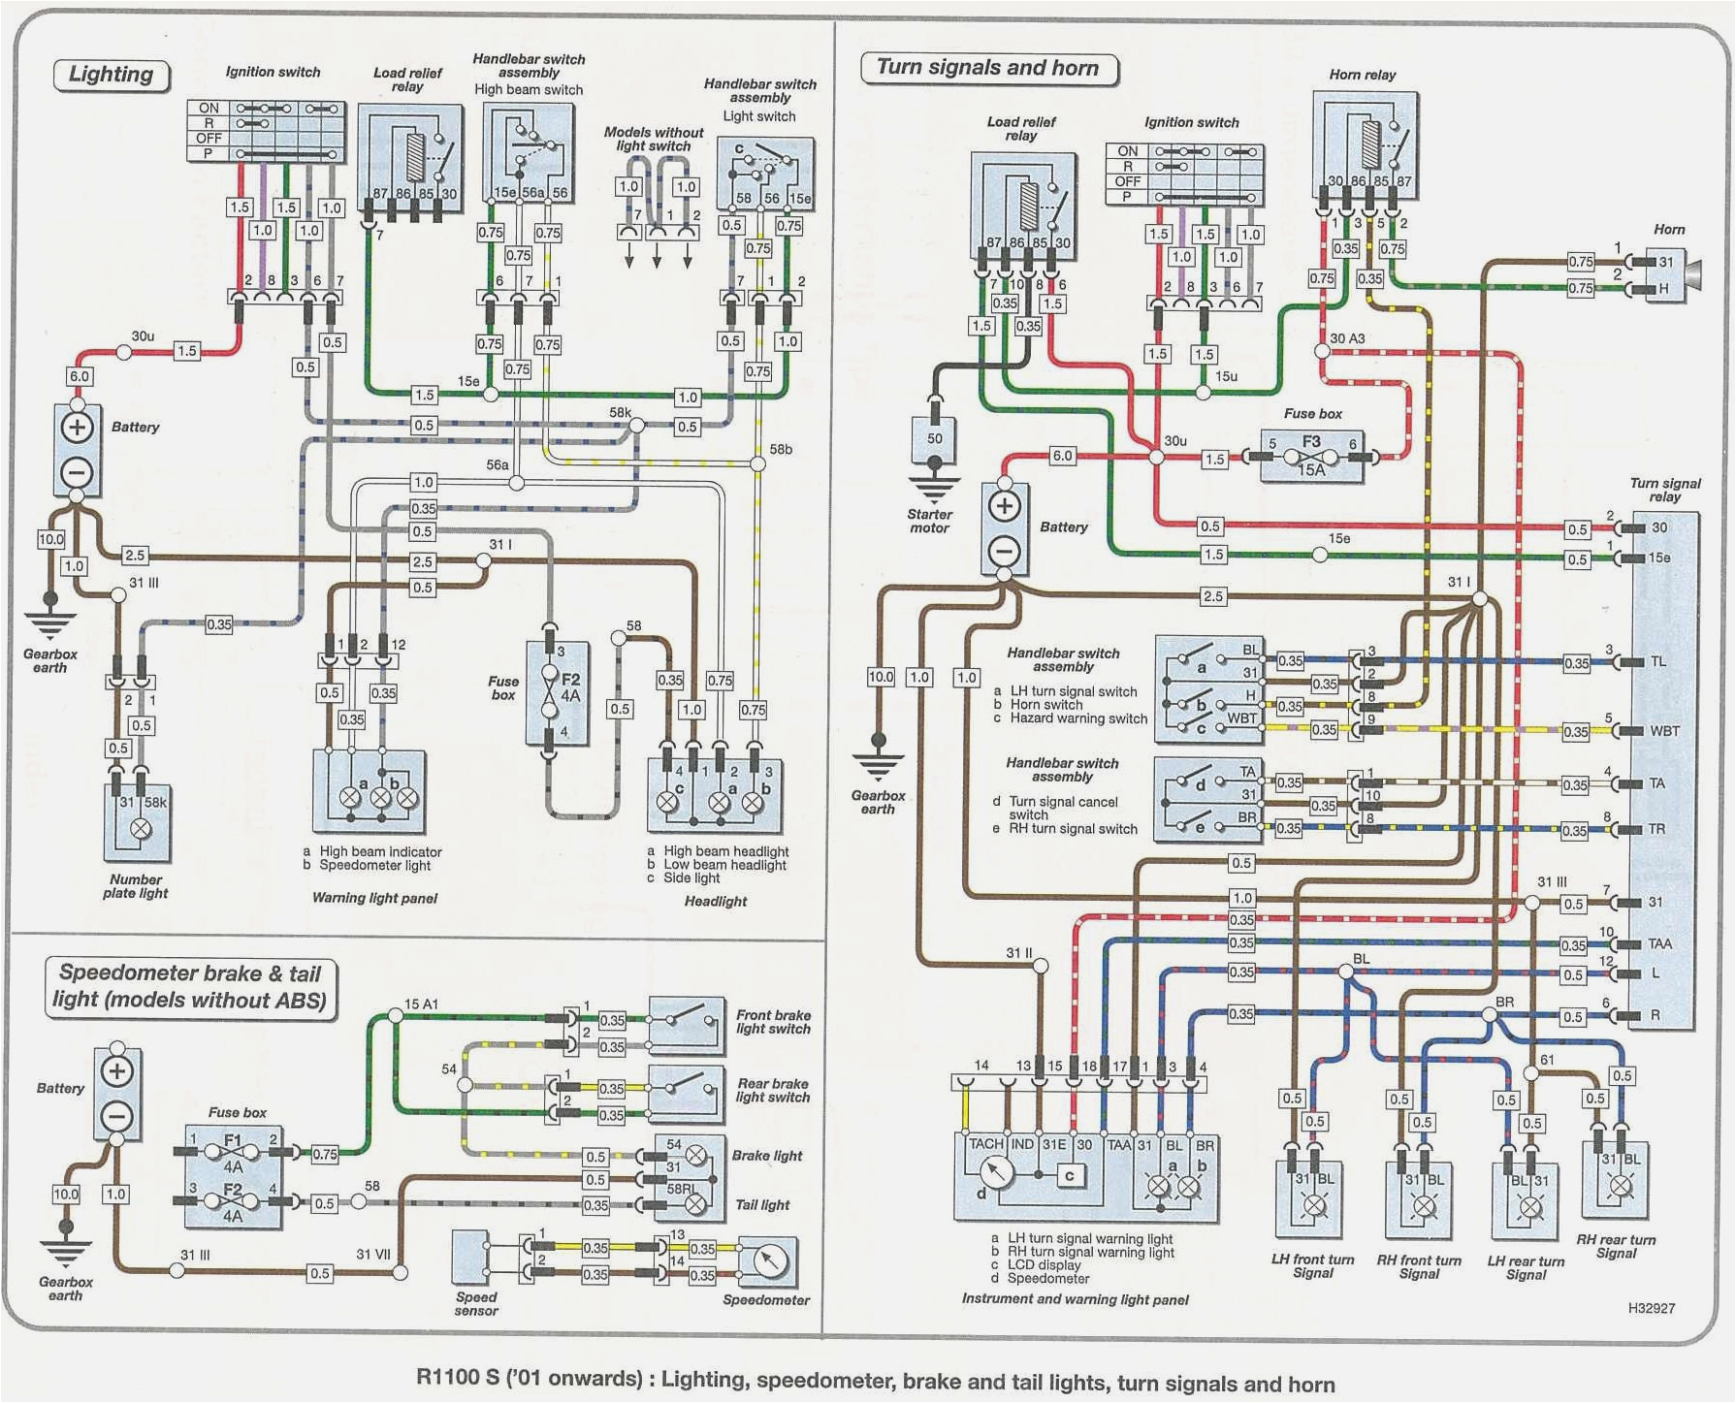 bmw wds wiring diagram blog wiring diagram wds bmw wiring diagram system 5 e60 e61 bmw wiring diagram system